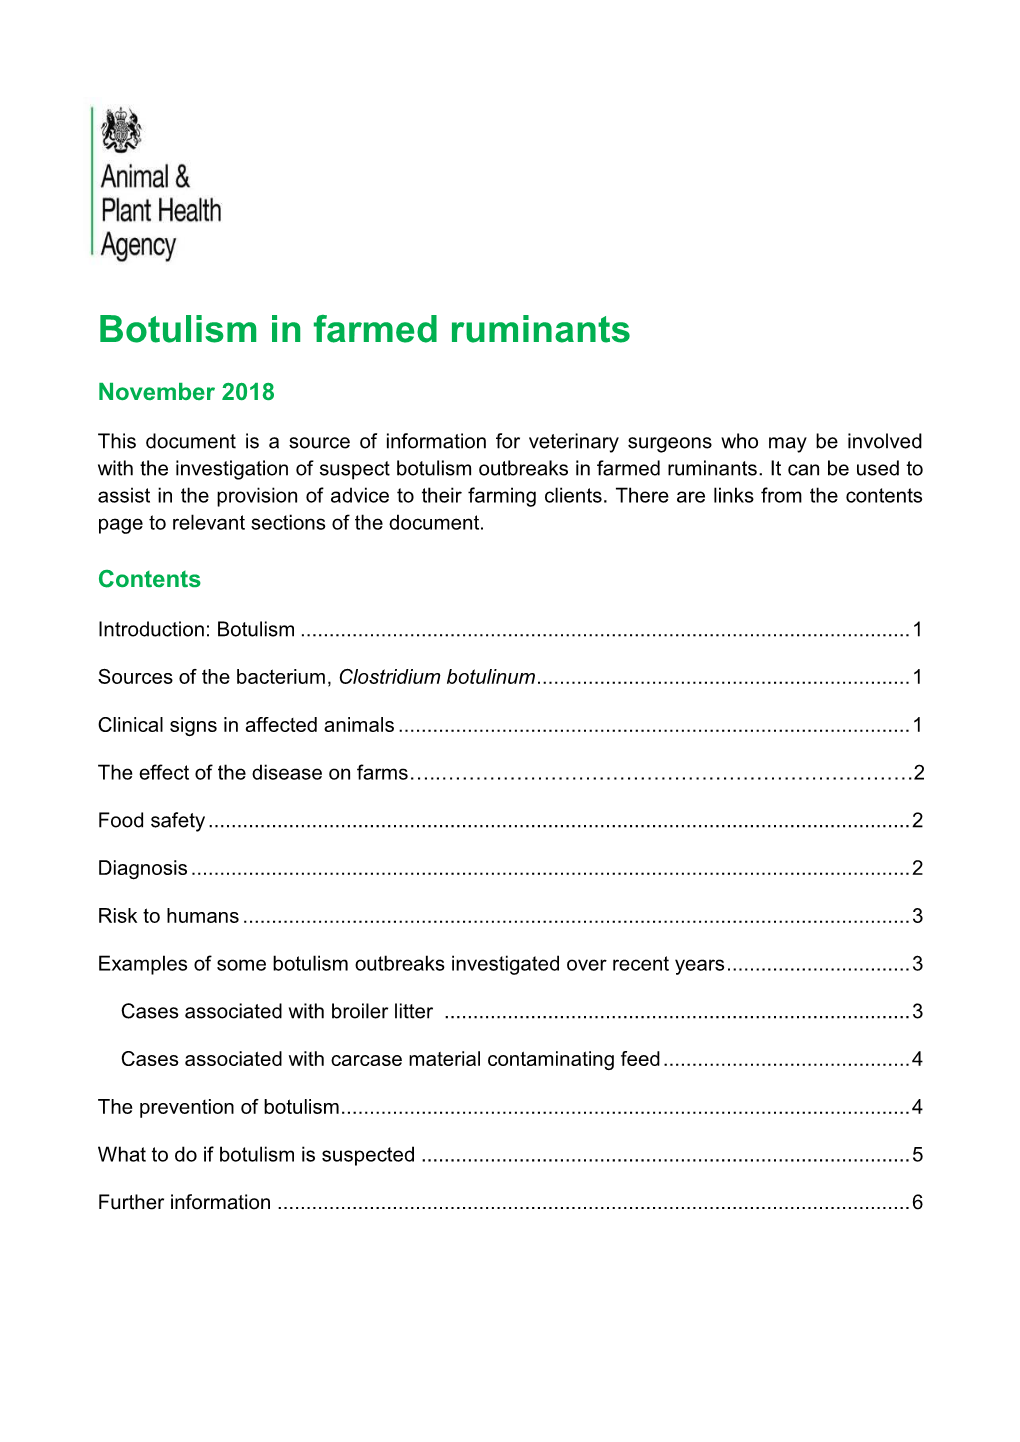 Botulism in Farmed Ruminants